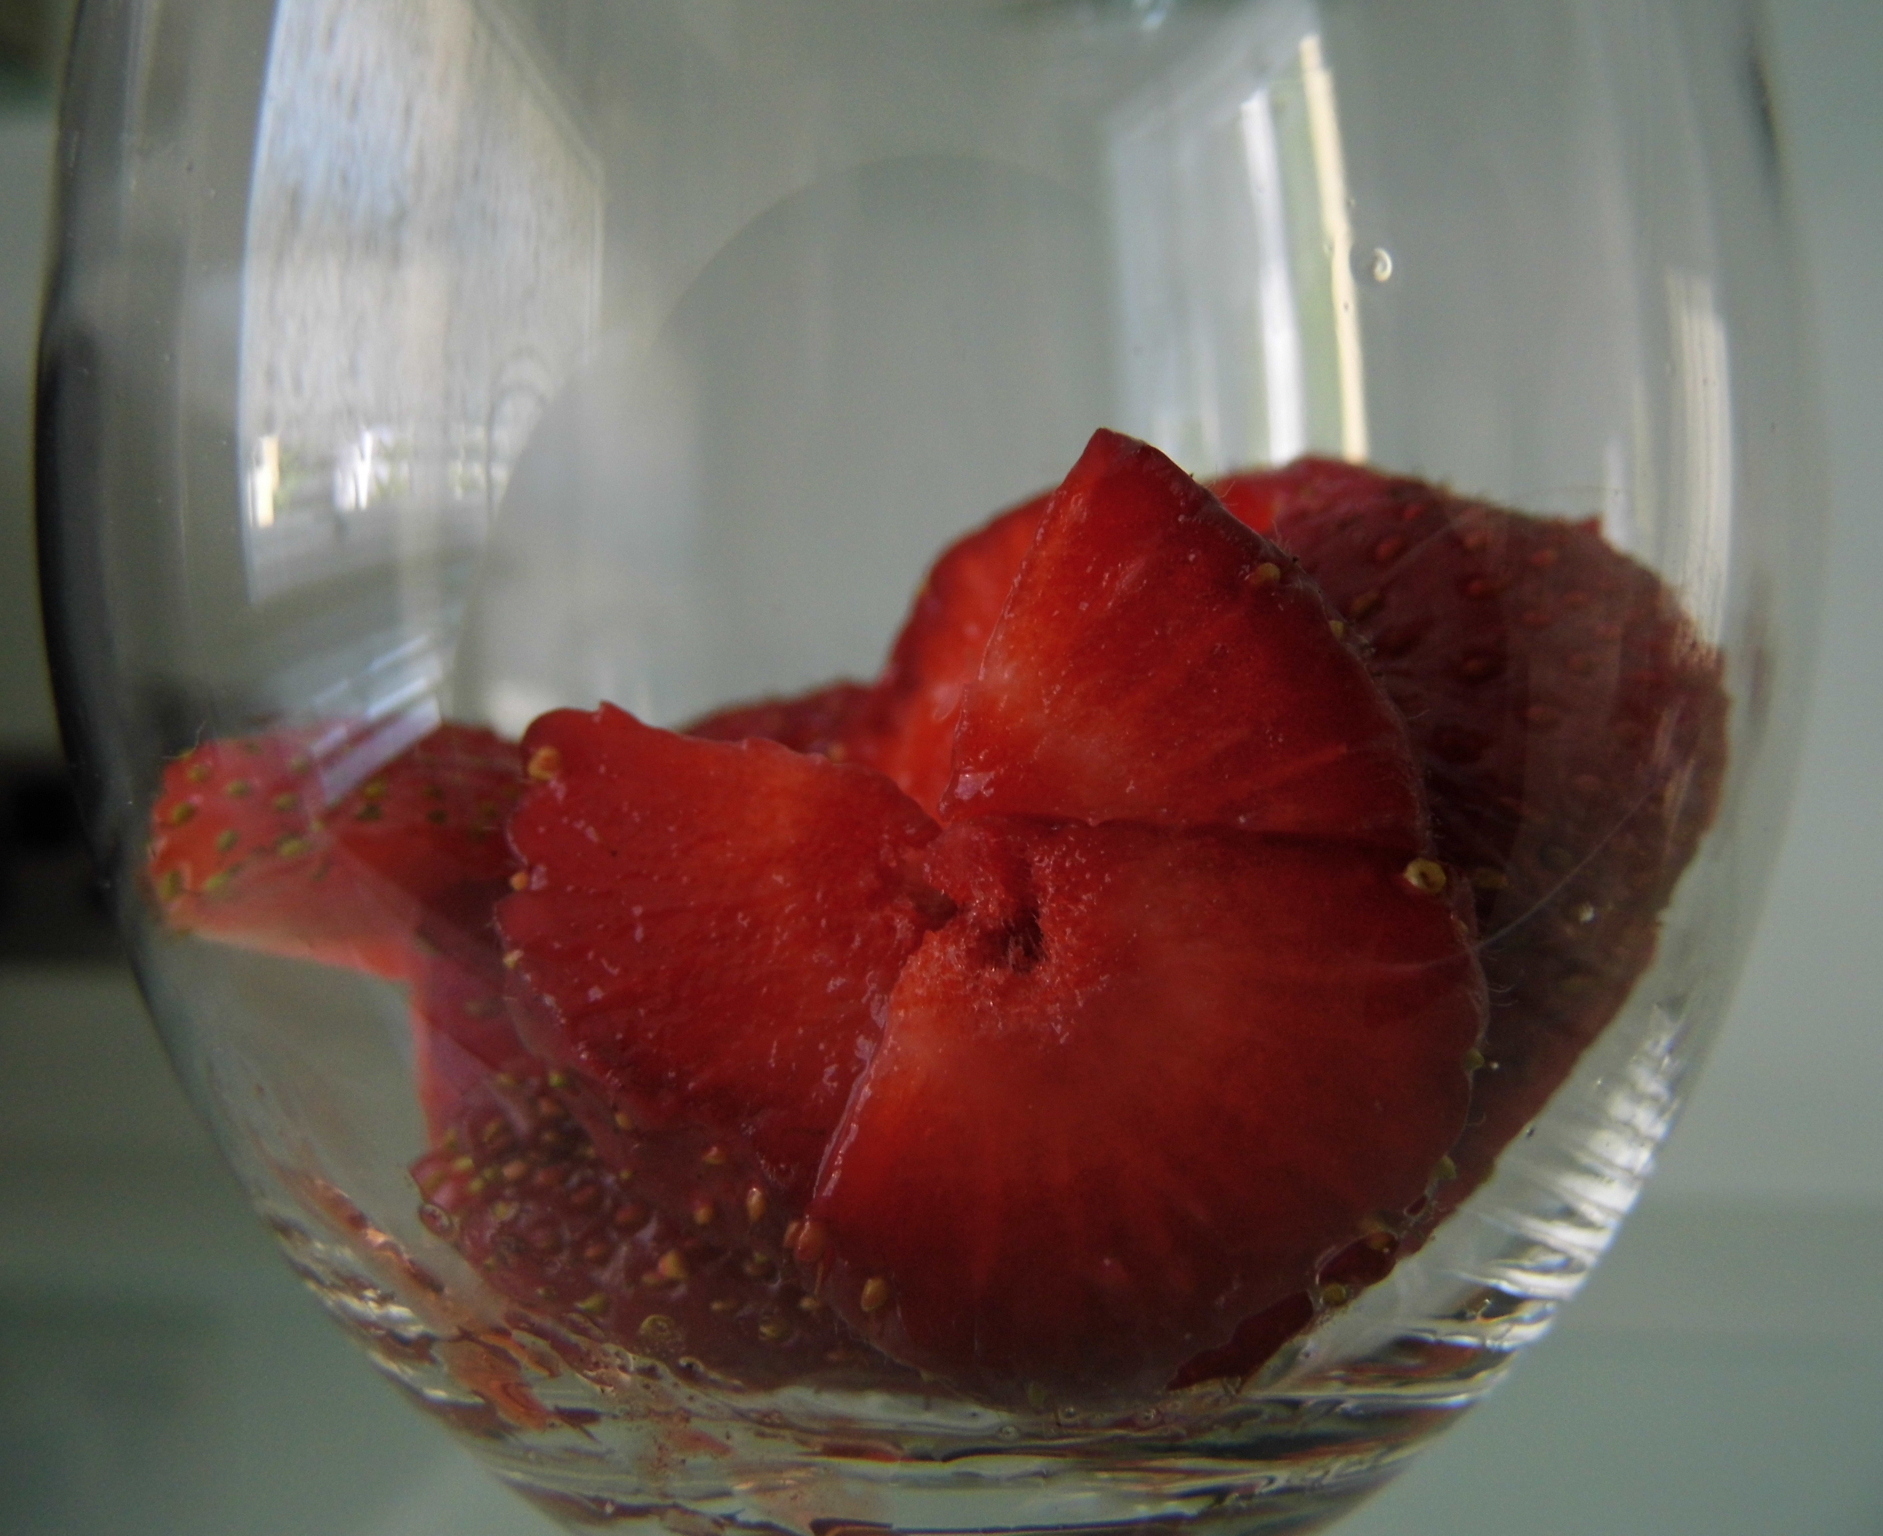 Strawberries in glass